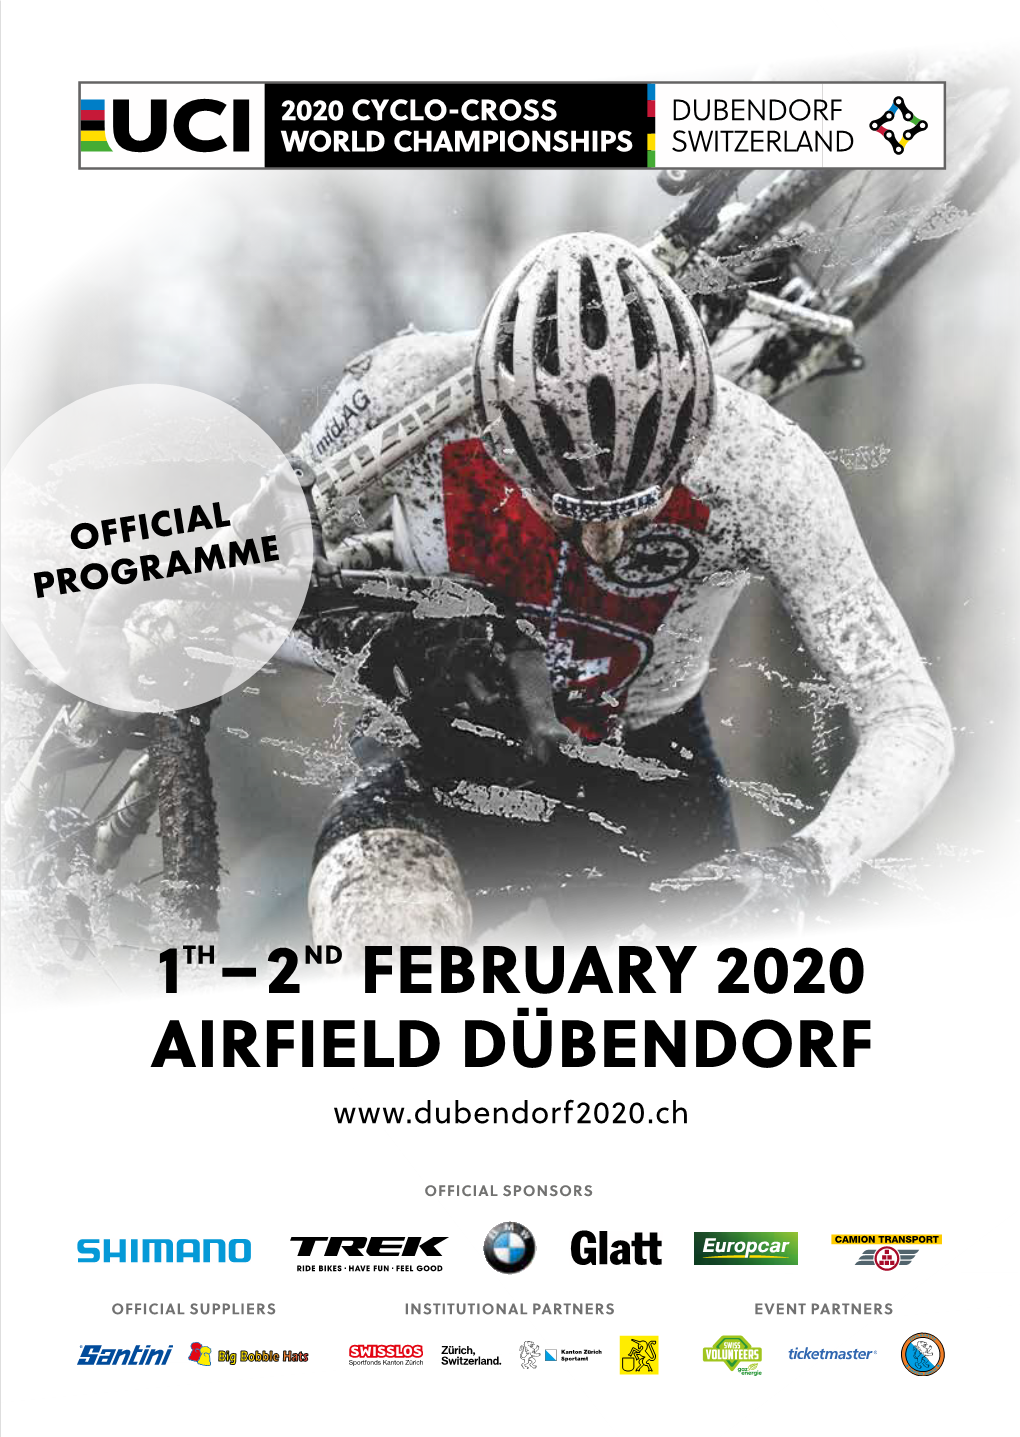 2Nd February 2020 Airfield Dübendorf